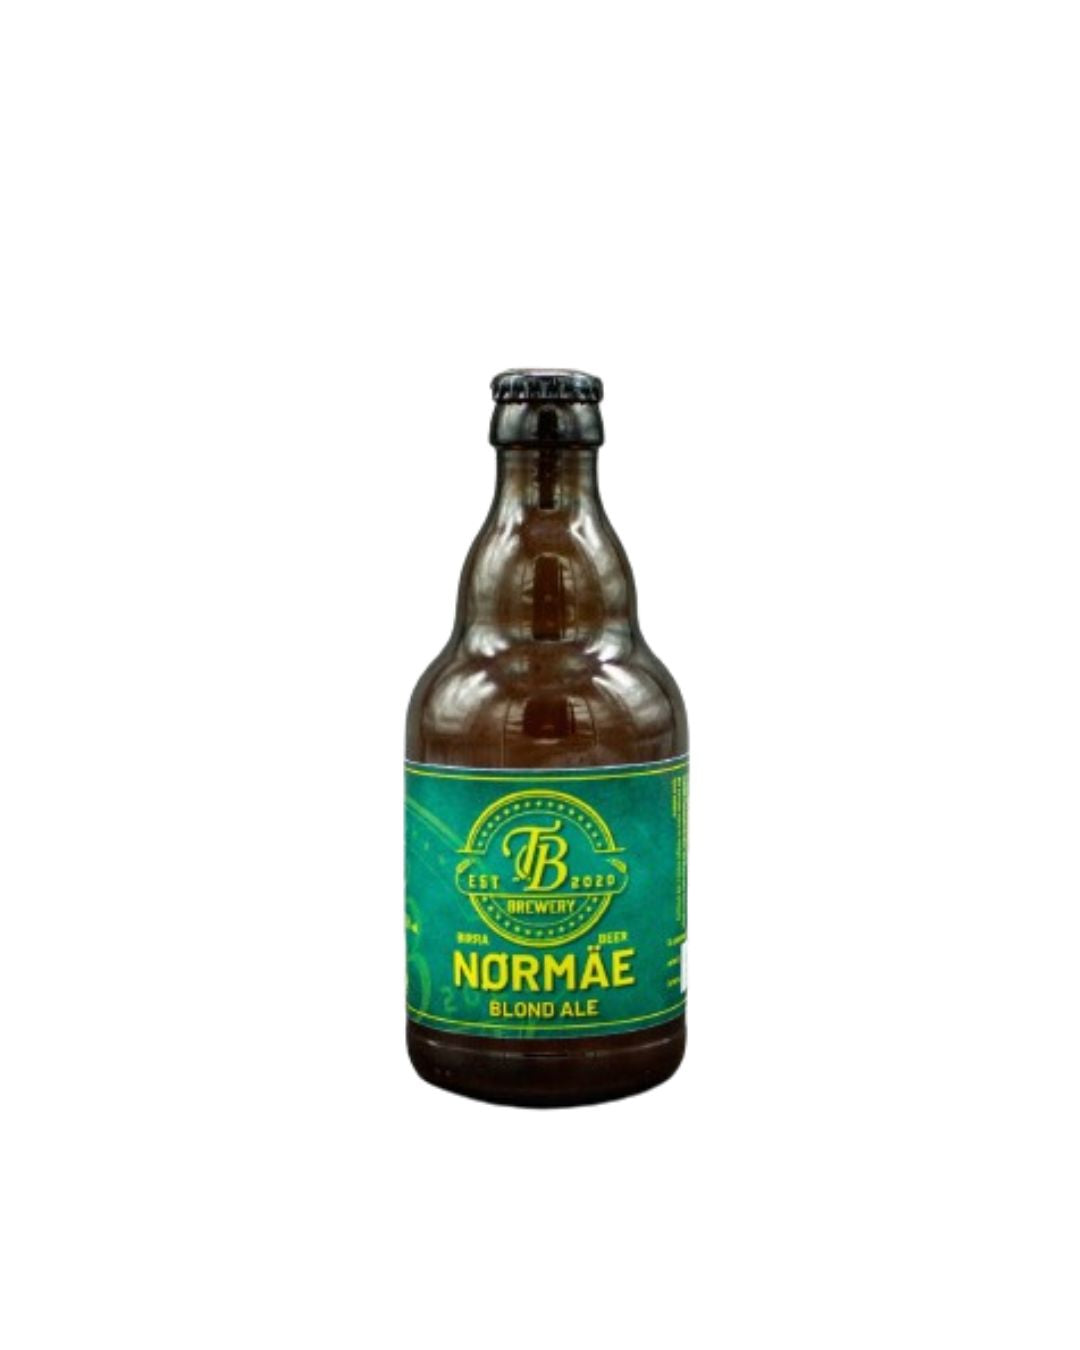 Nørmäe - Blond Ale Vol. 5% - TB Brewery